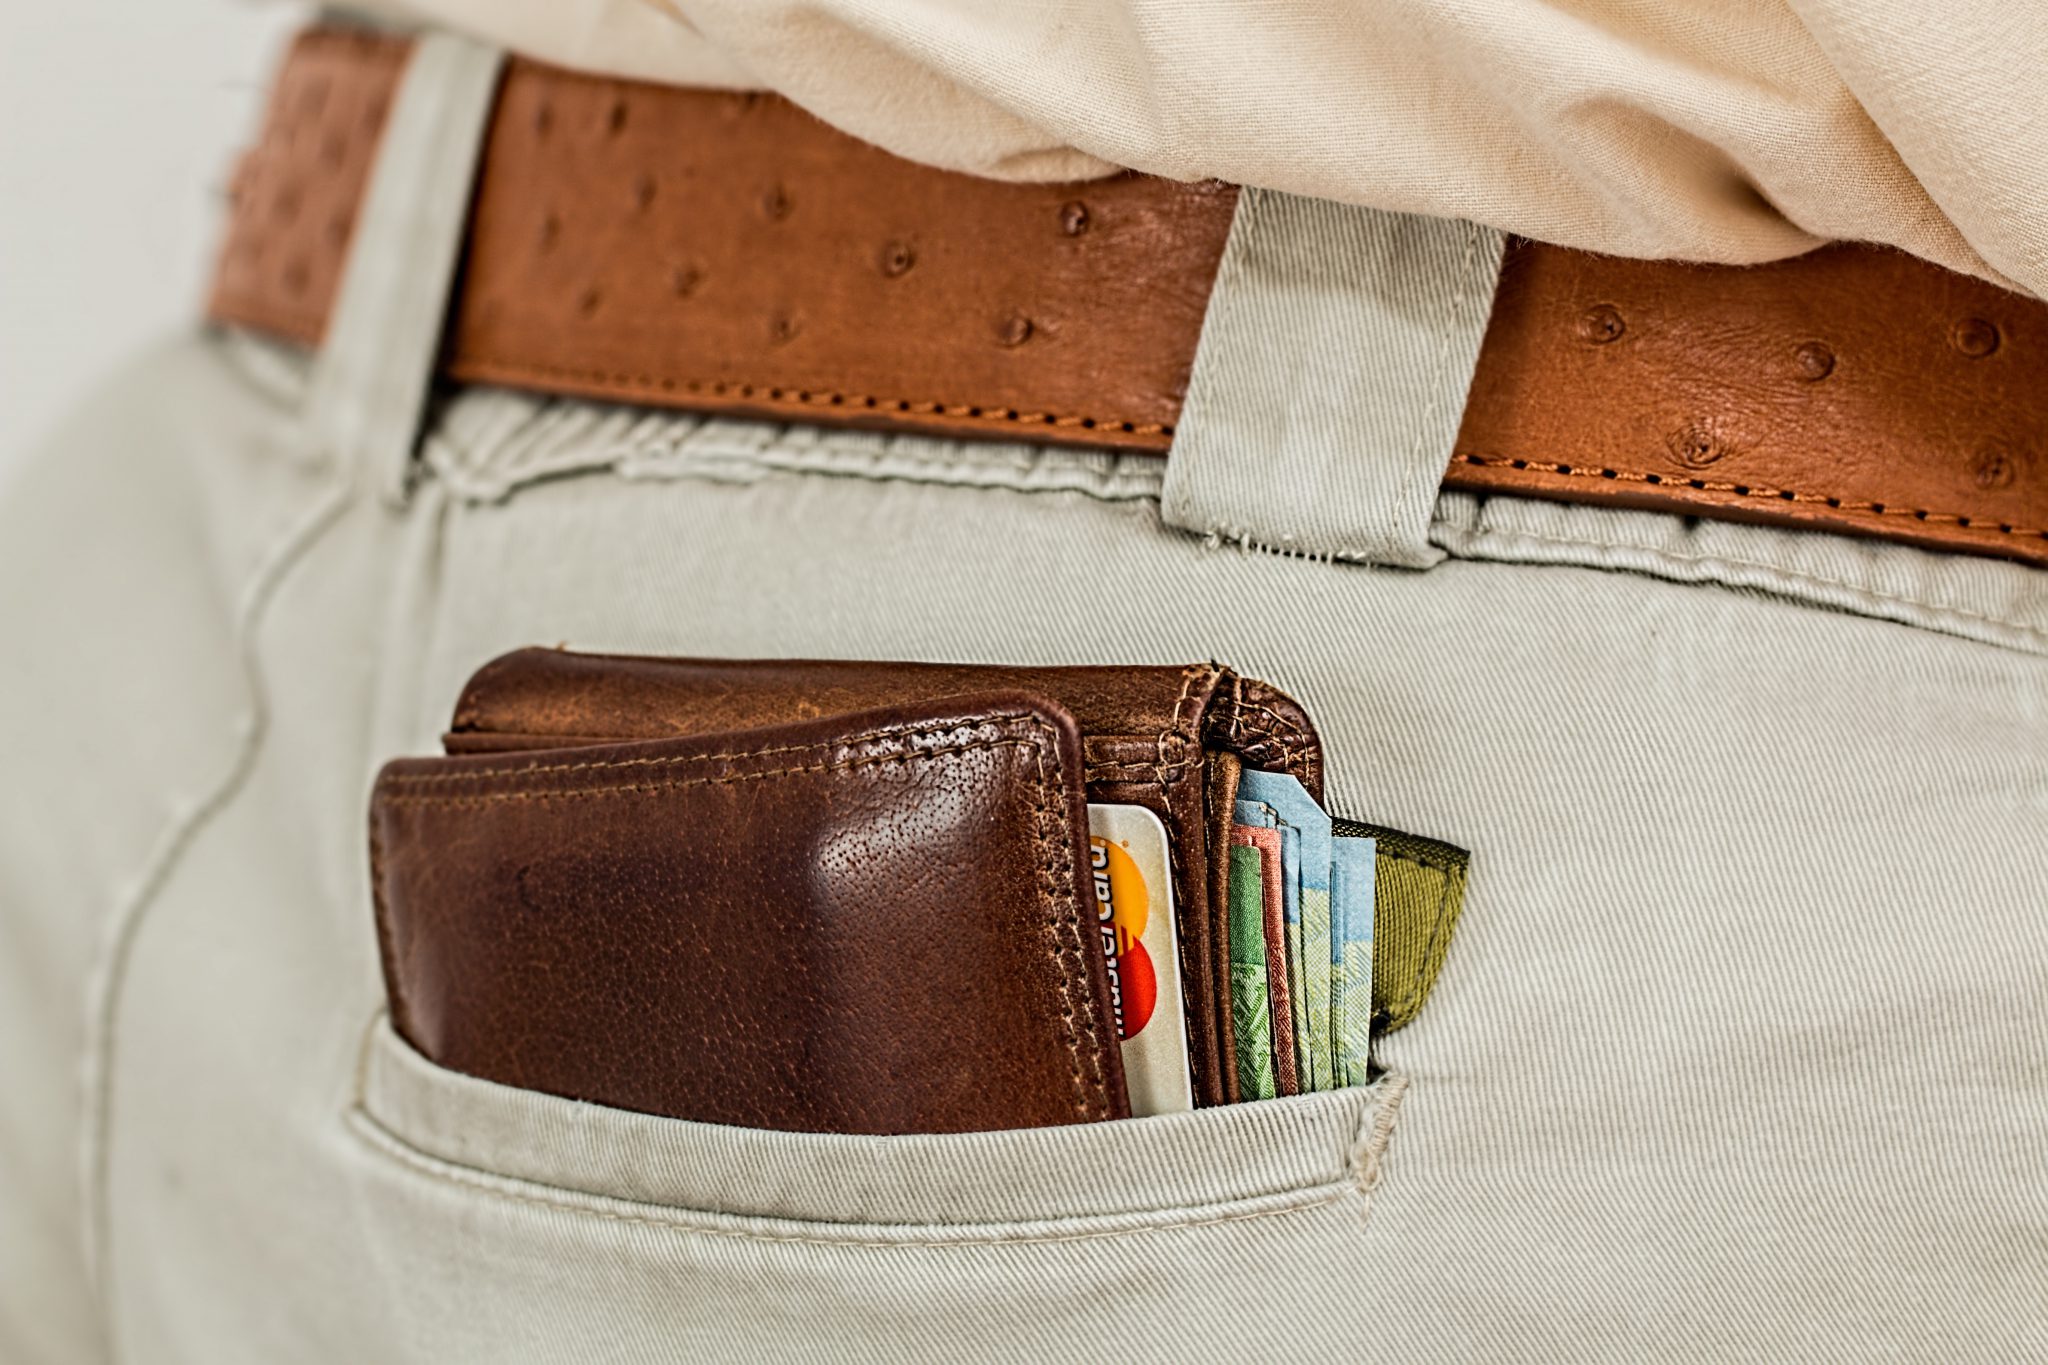 Credit cards and cash advances